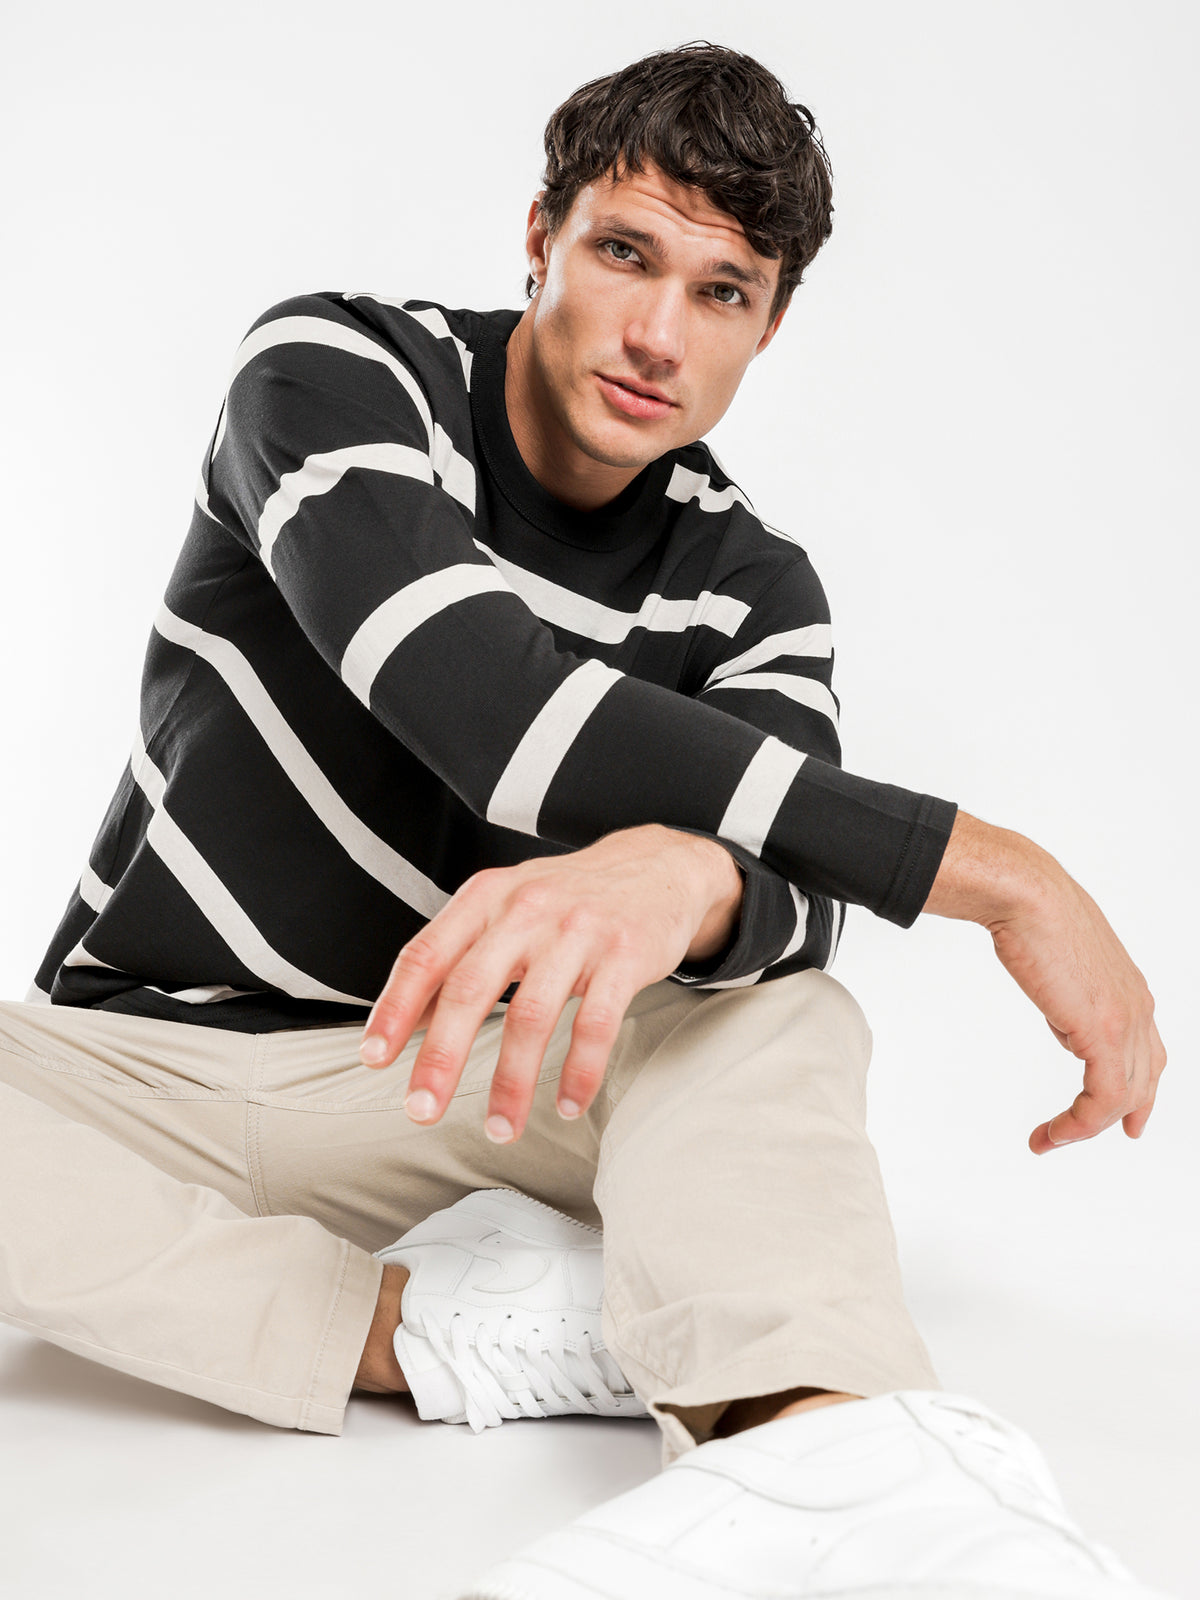 Ezra Long Sleeve T-Shirt in Washed Black Stripe